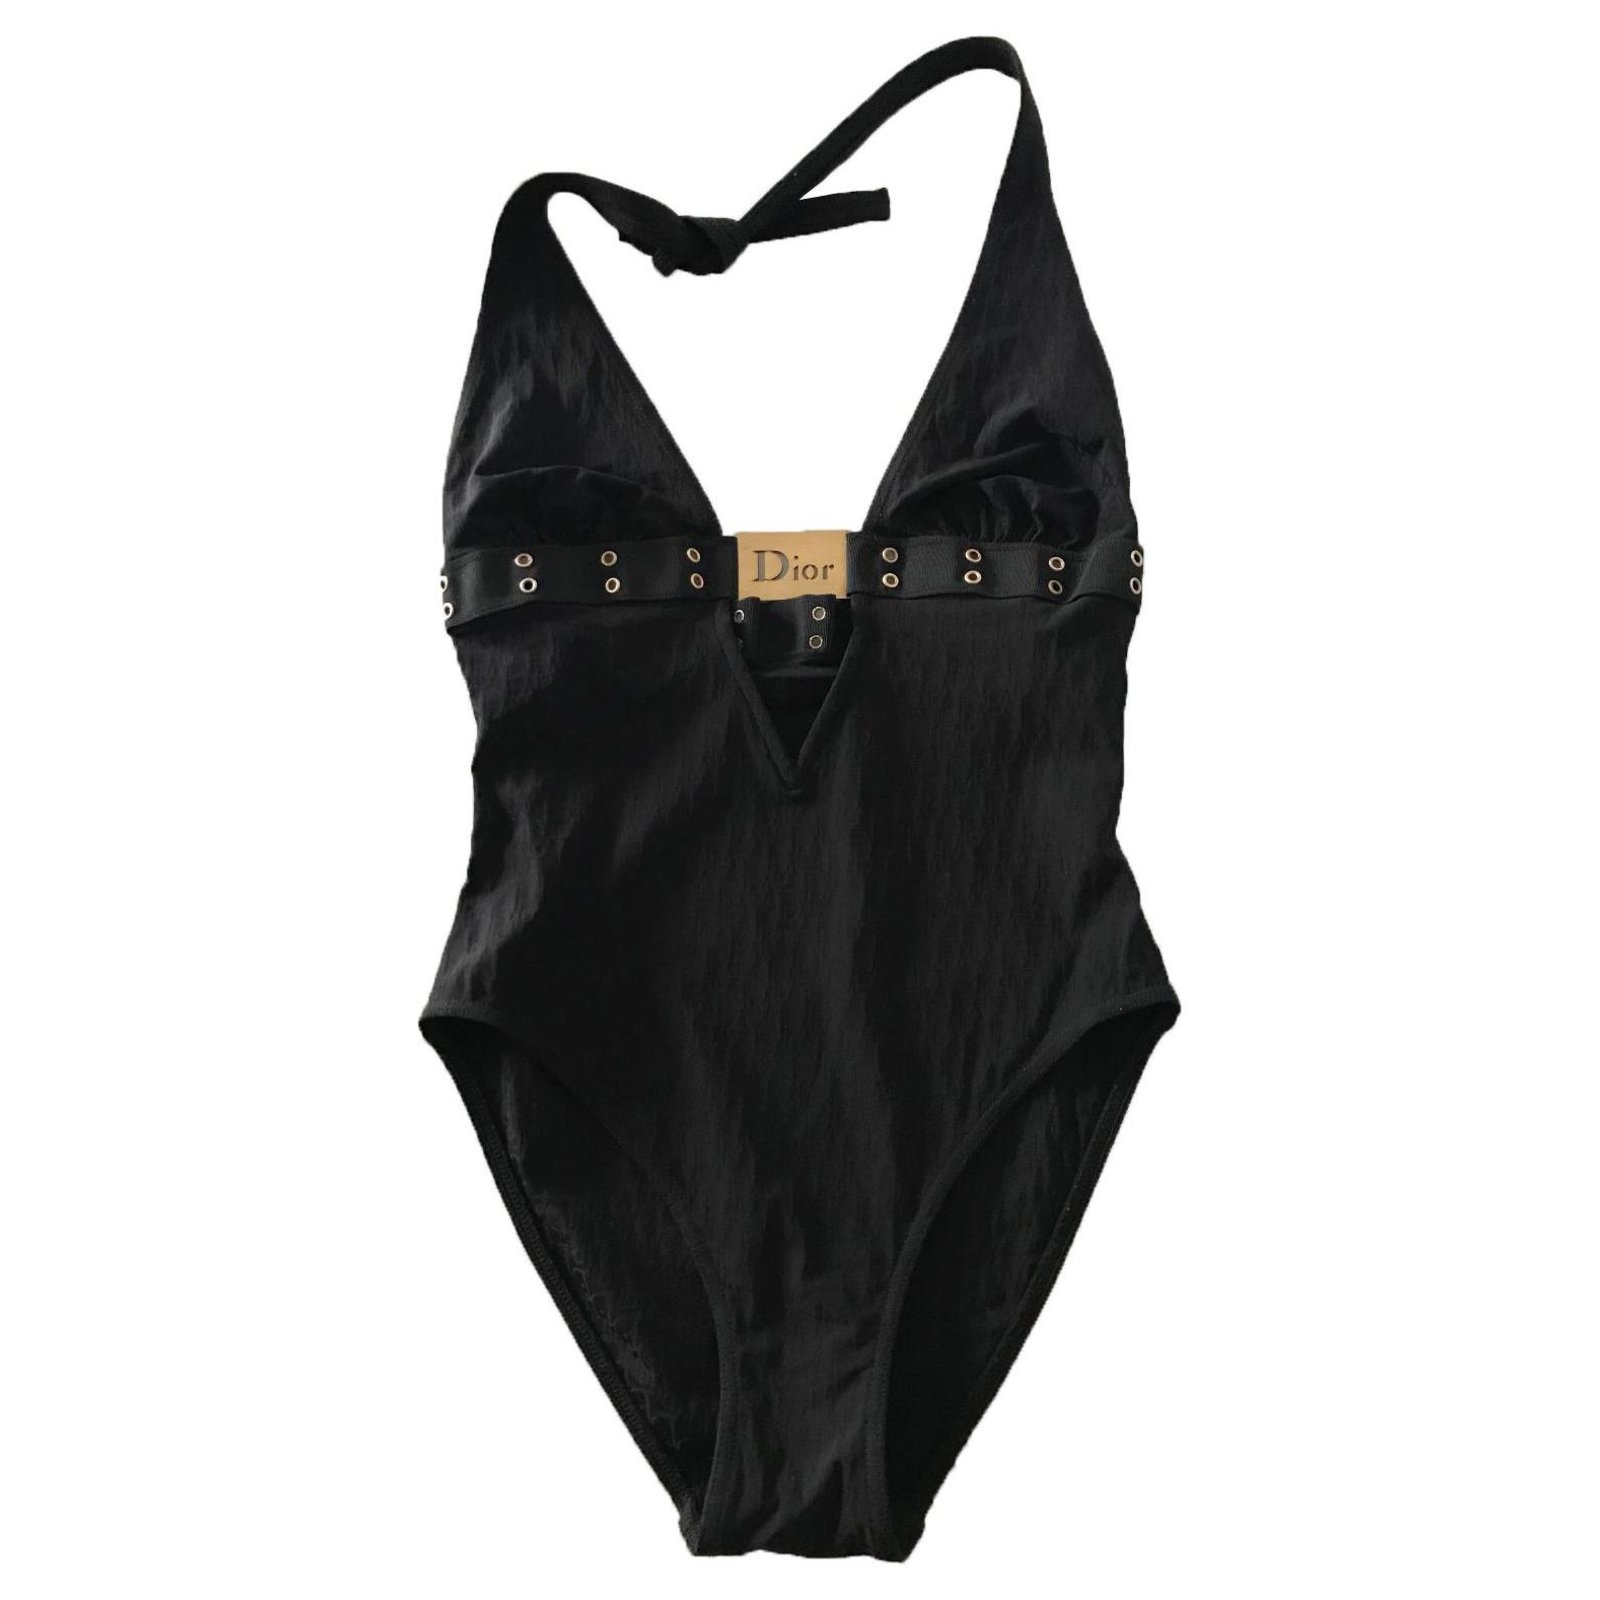 Dior Women's One-Piece Swimsuit